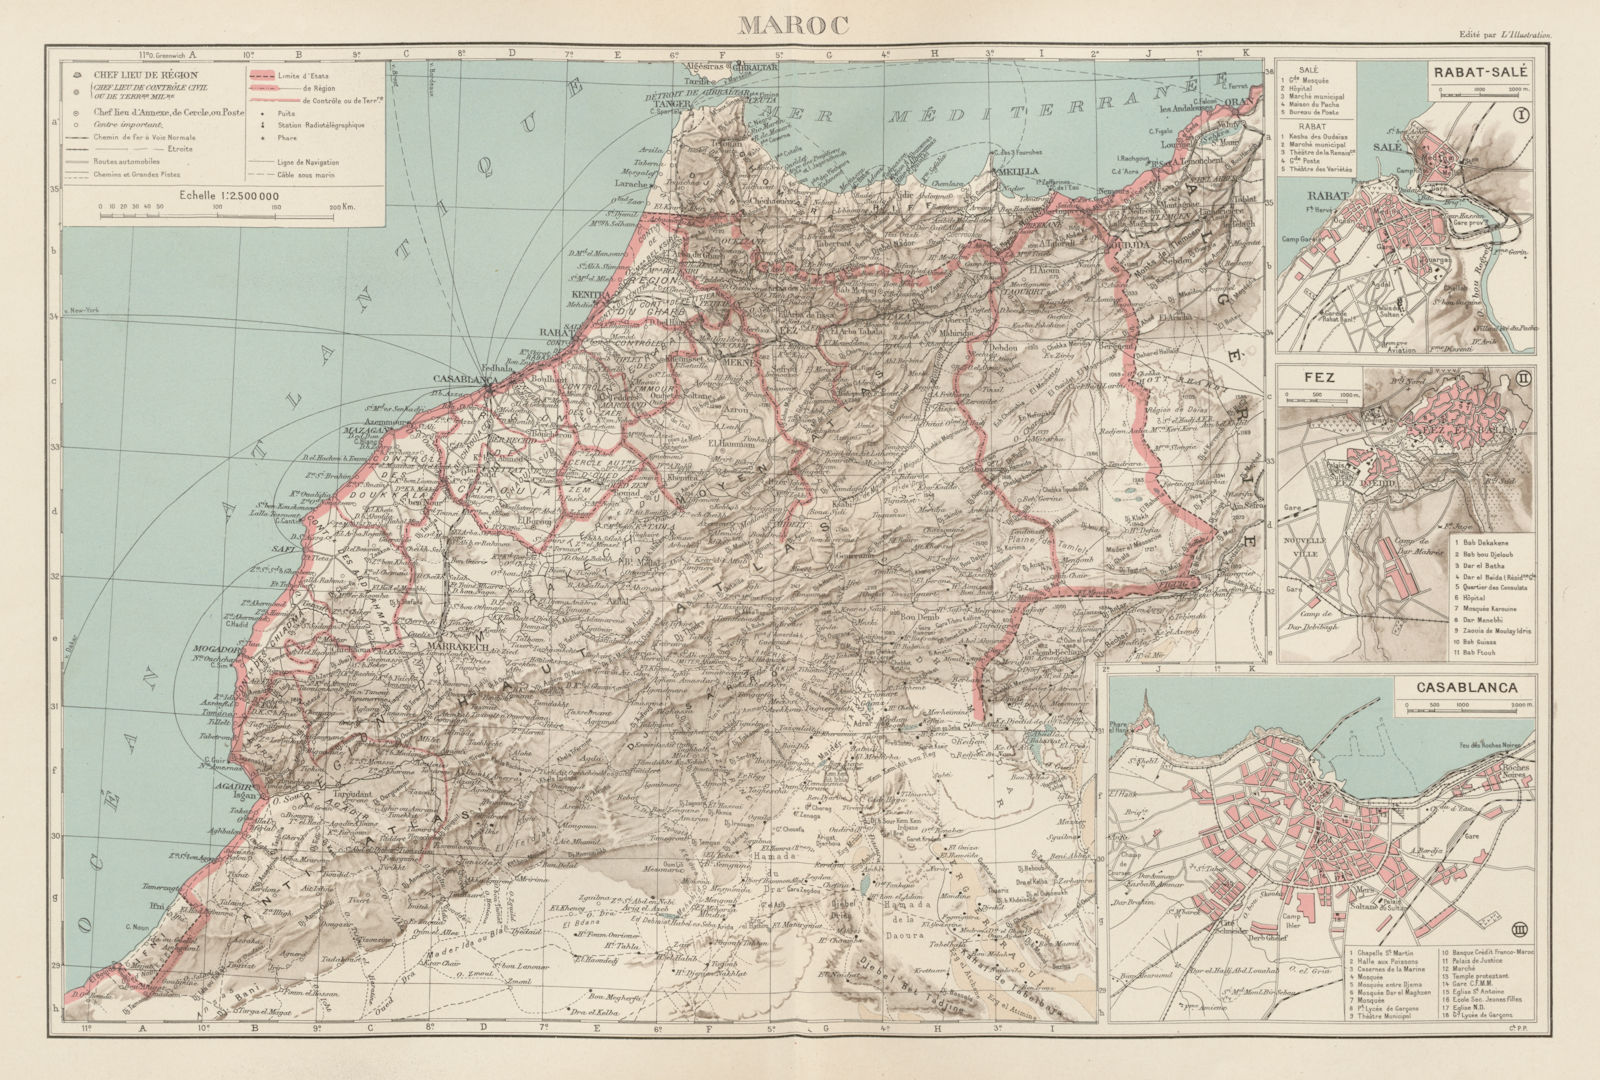 FRENCH MOROCCO. Maroc Protectorat français. Rabat Fez Casablanca plans 1929 map